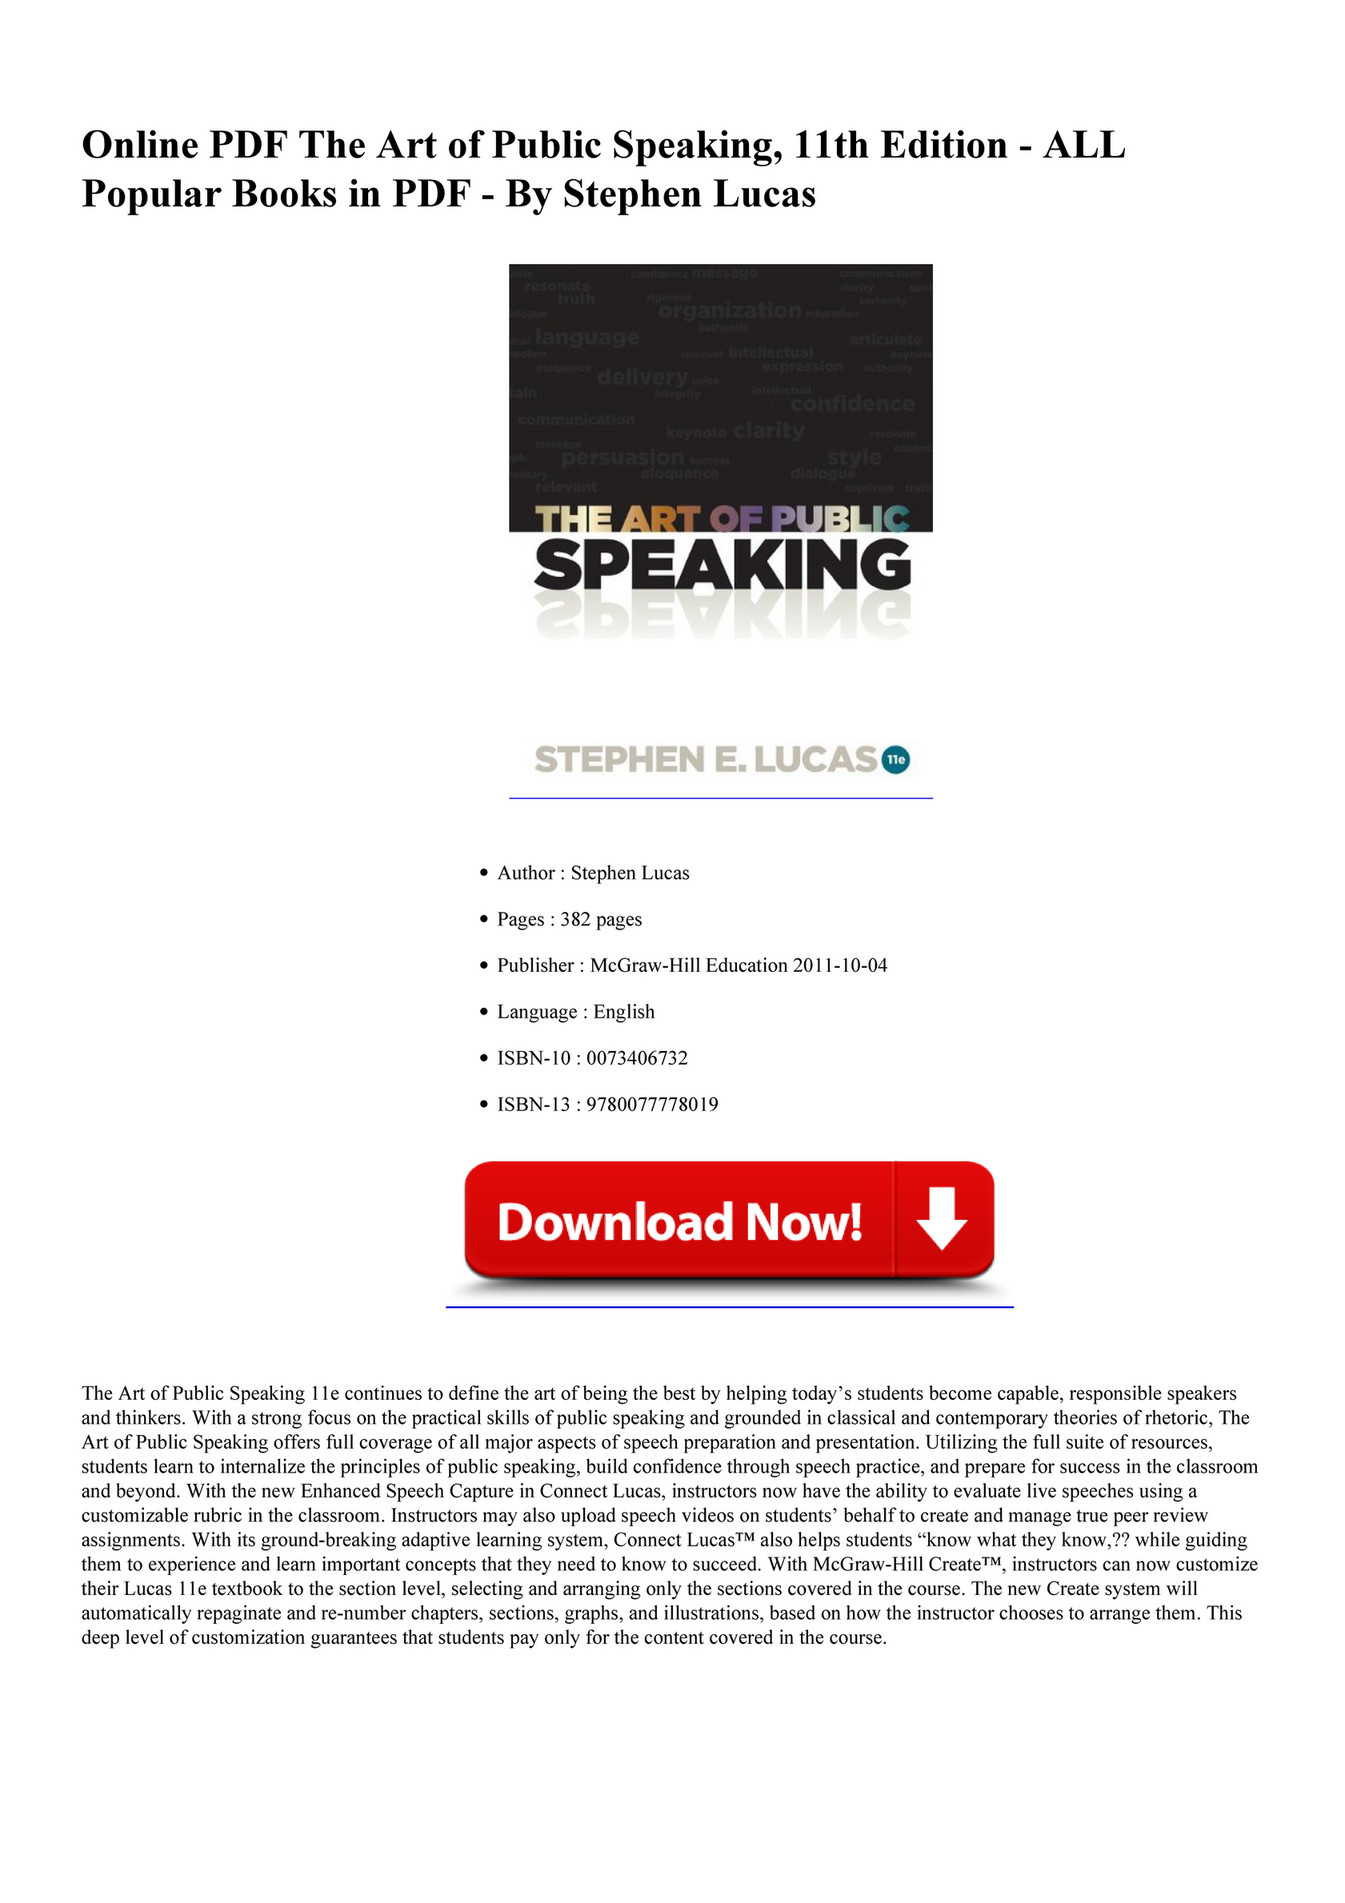 Art of public speaking lucas 11th pdf to jpg free